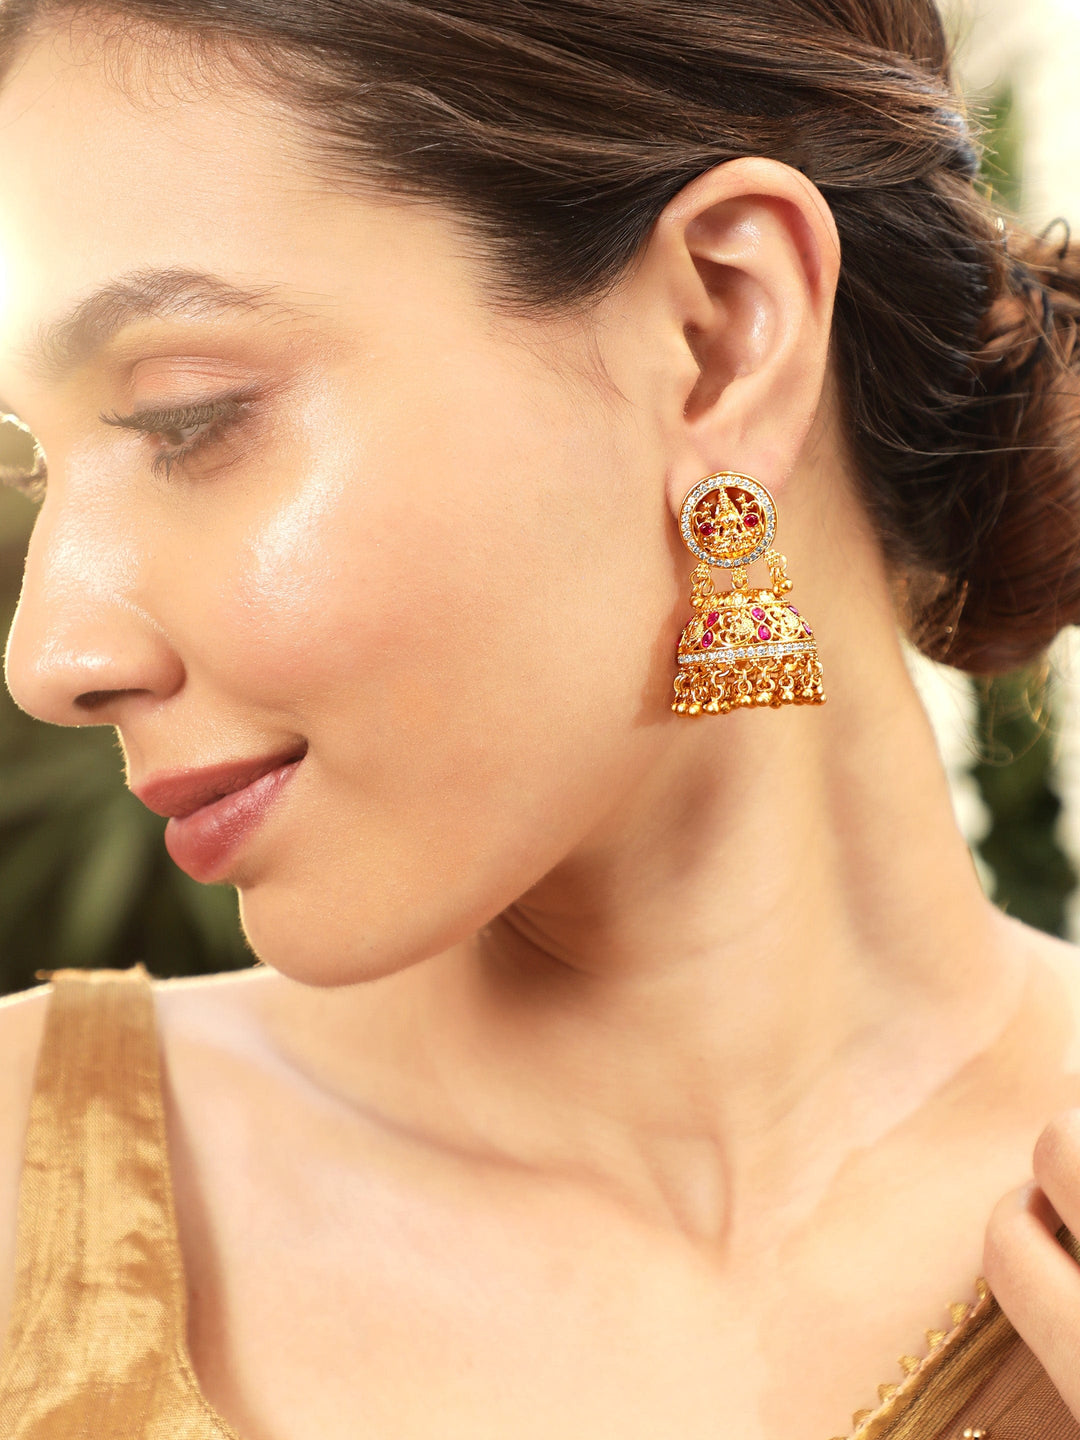 Rubans Regal Radiance Temple-Inspired 22k Gold Jhumka Delight Earrings